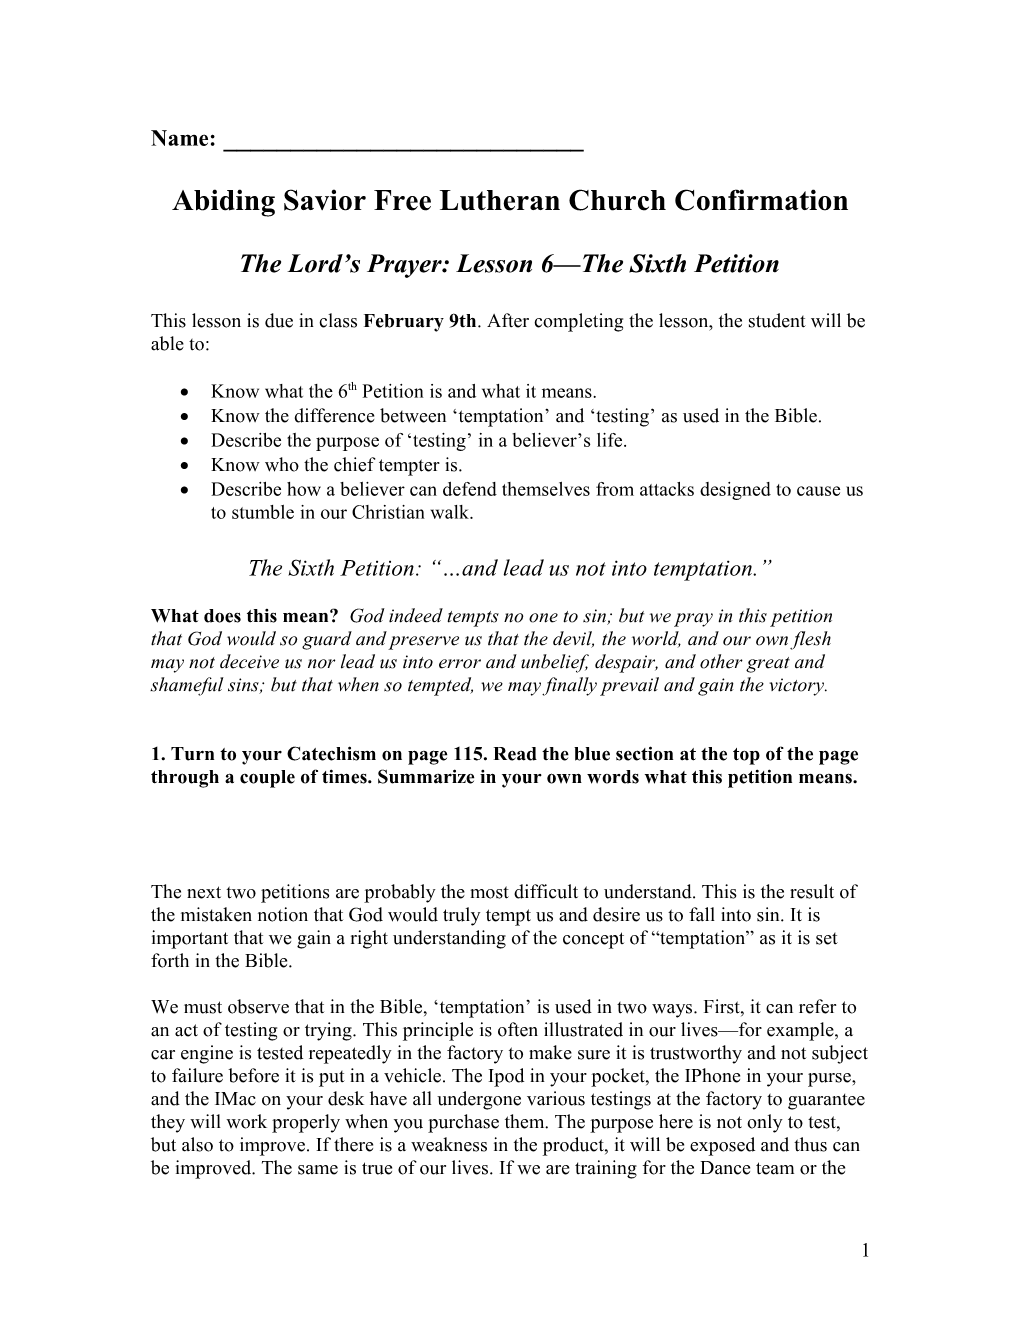 Abiding Savior Free Lutheran Church Confirmation s1